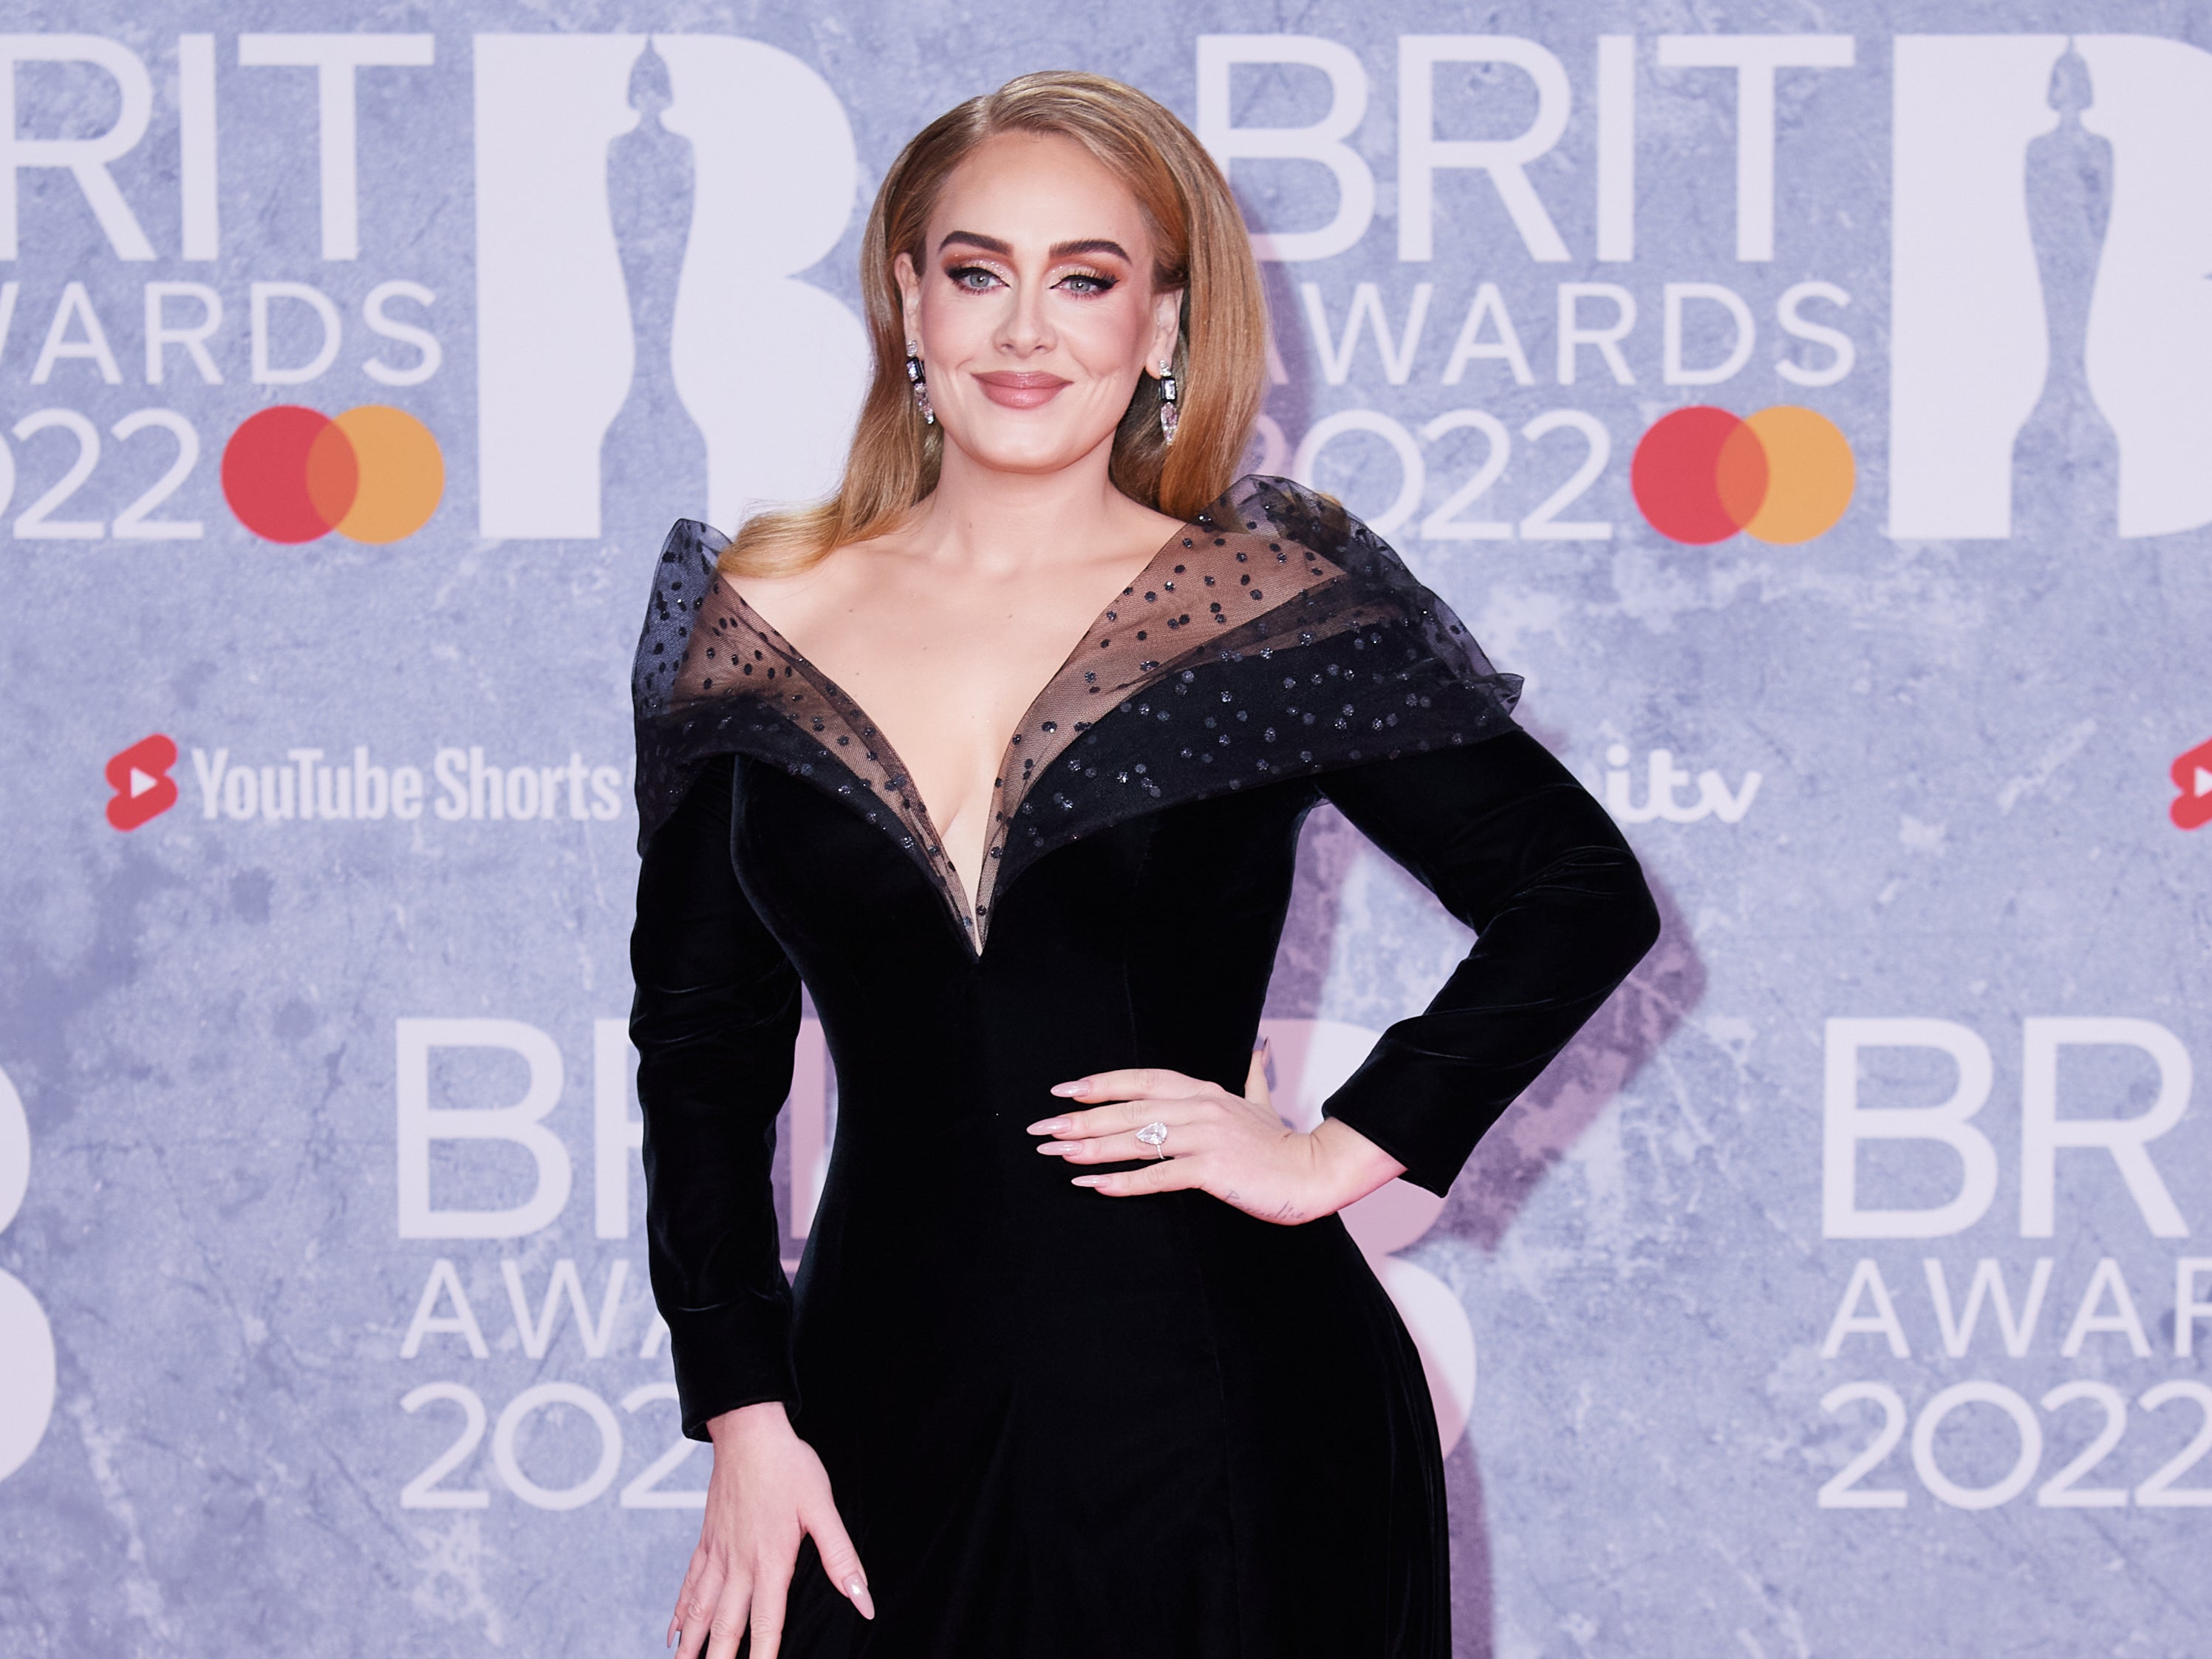 Adele released her fourth album, 30, in November